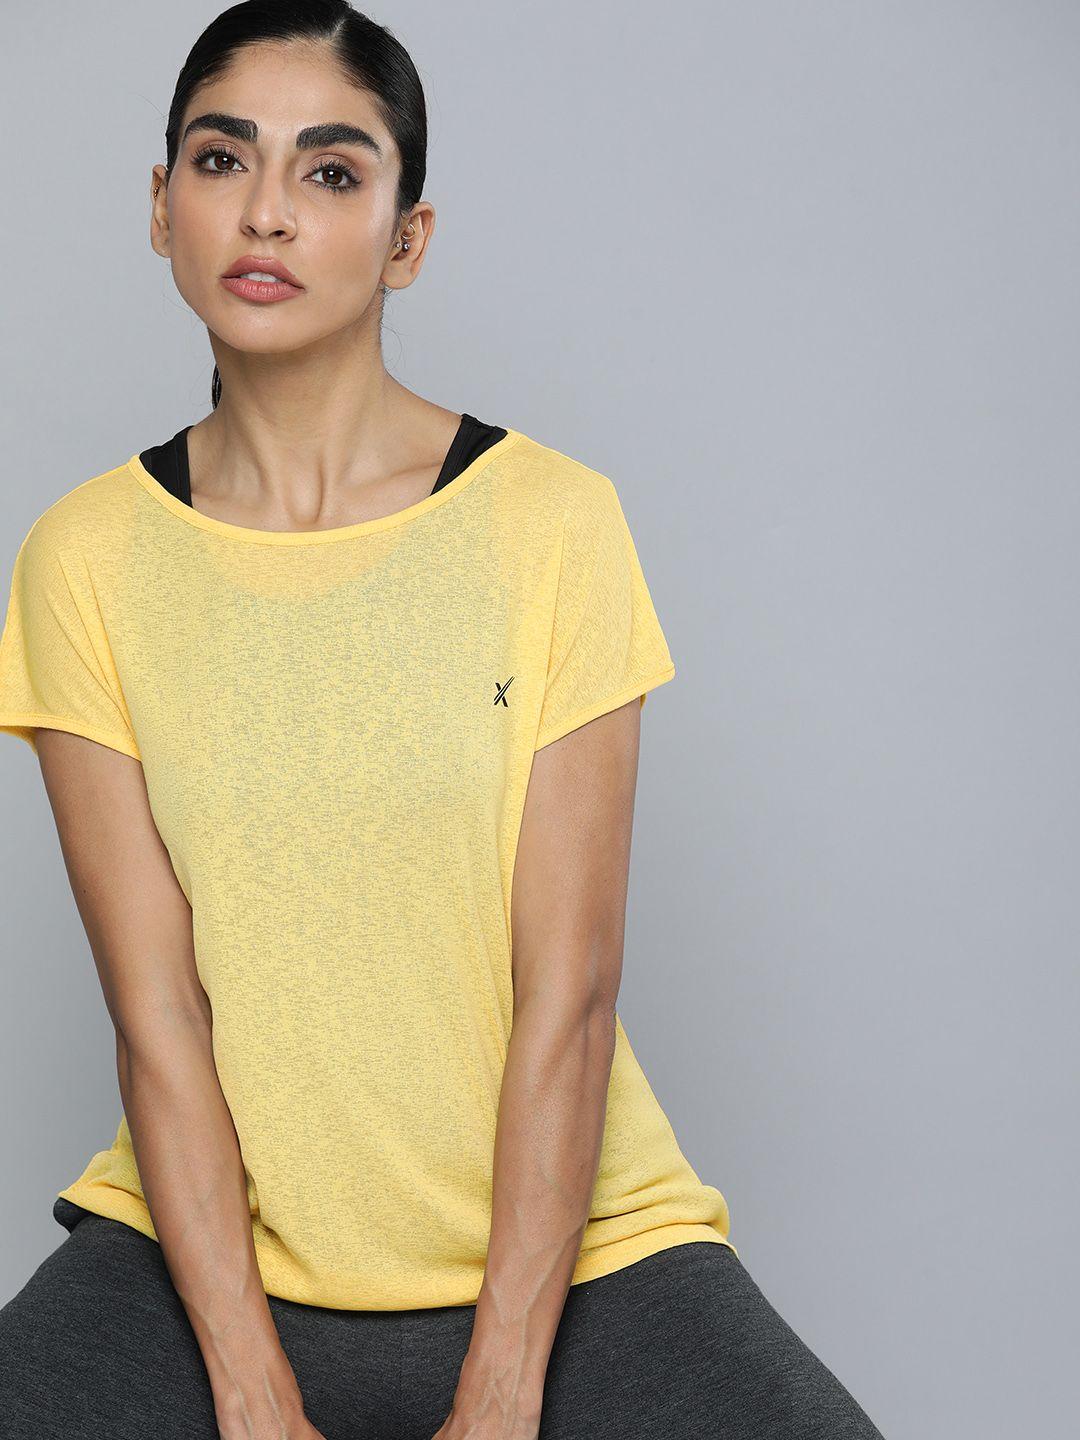 hrx by hrithik roshan women yellow & black pack of 2 rapid-dry training t-shirt